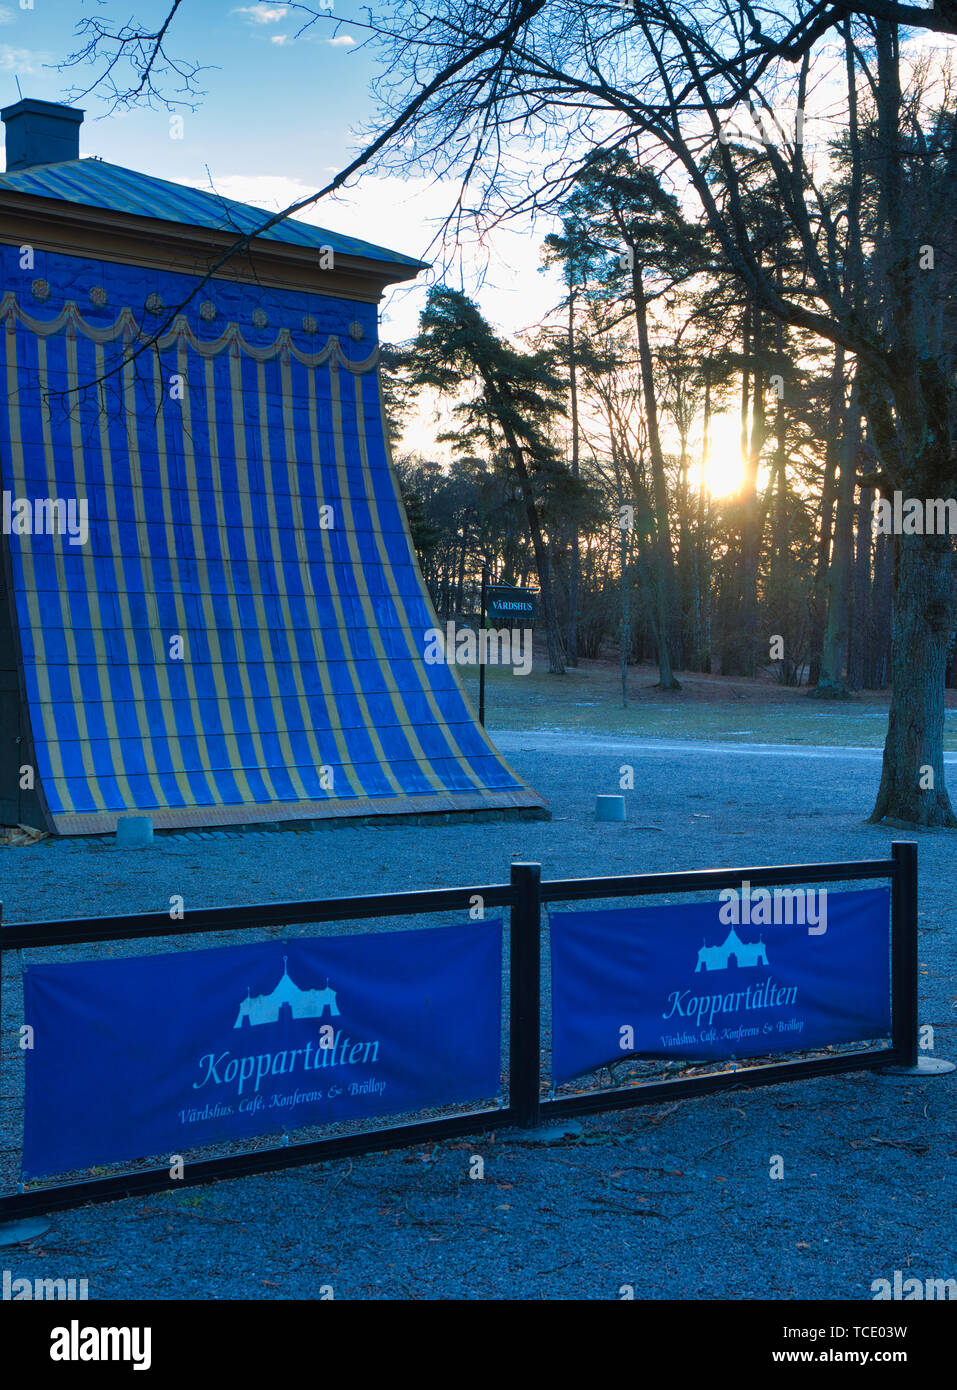 Sultan's rame tende all'alba, Haga Park (Hagaparken), Solna, Stoccolma, Svezia e Scandinavia Foto Stock